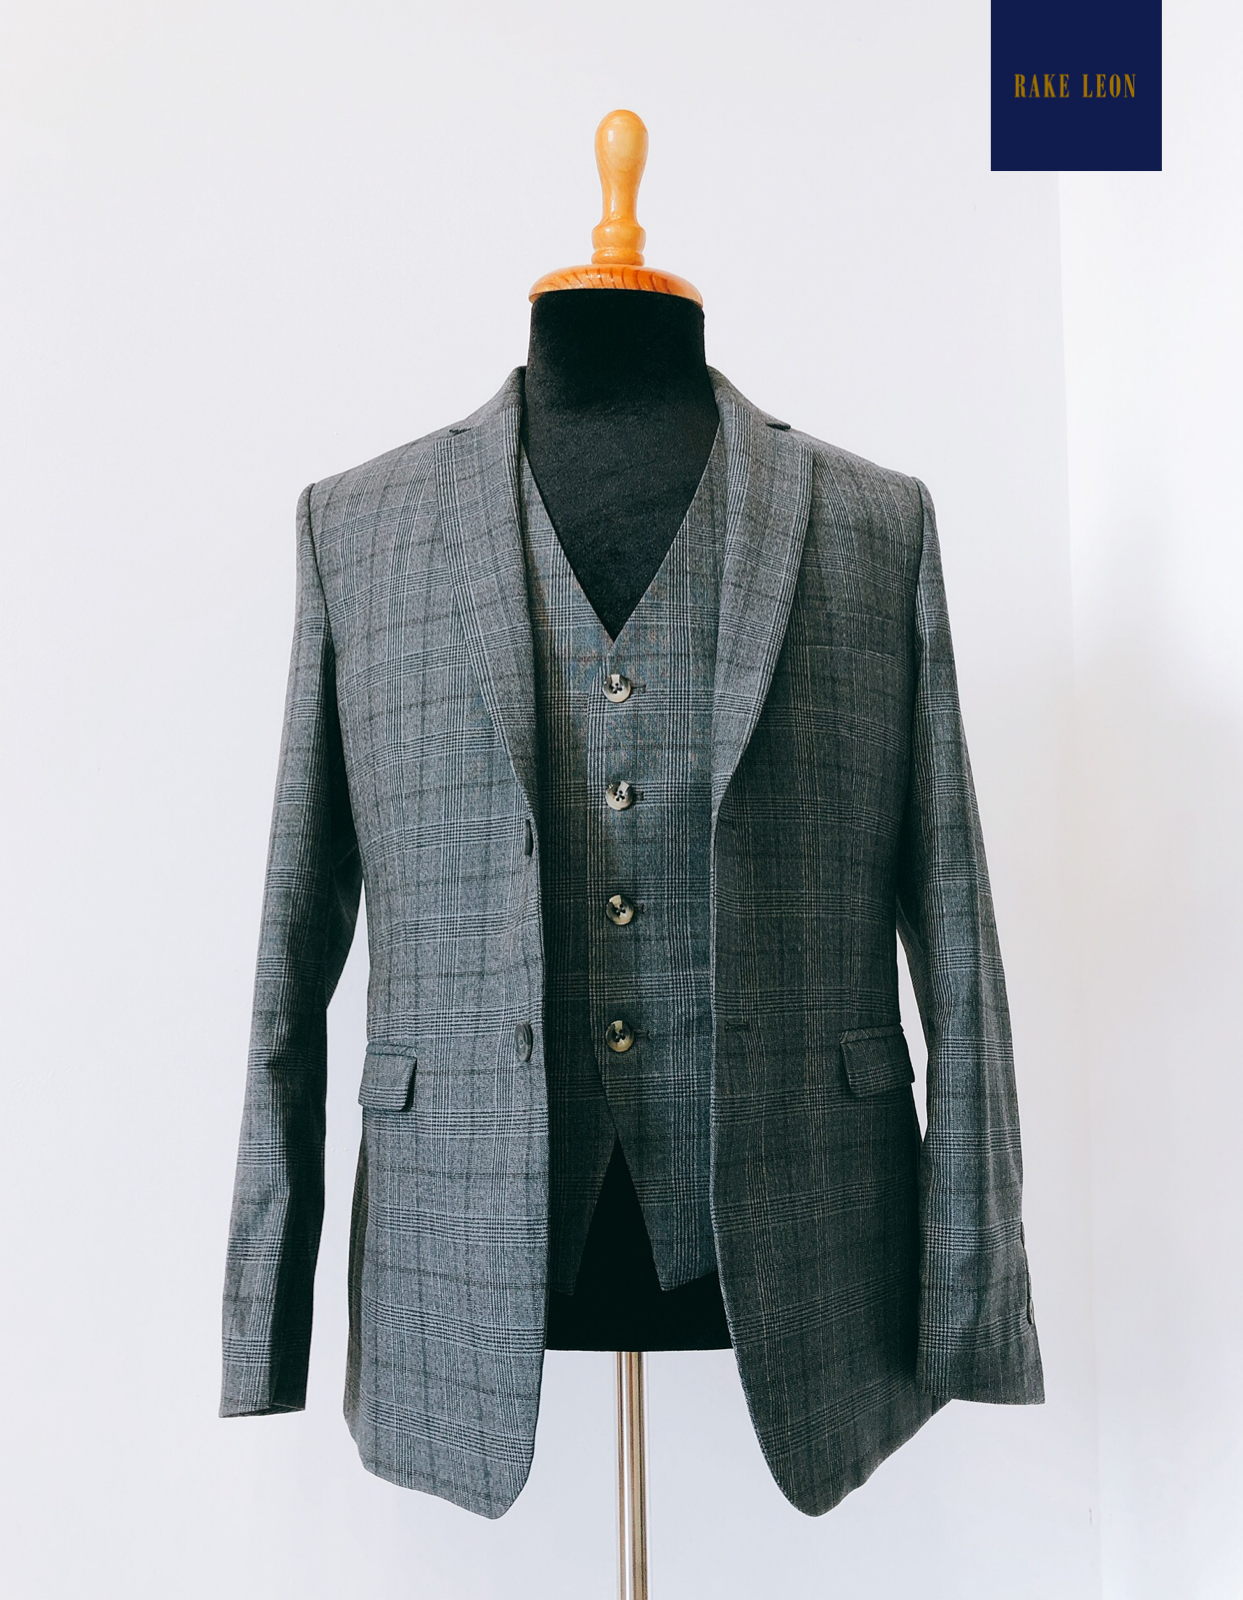 RAKE LEON 3-Piece Plaid Grey Prince of Wales Suit